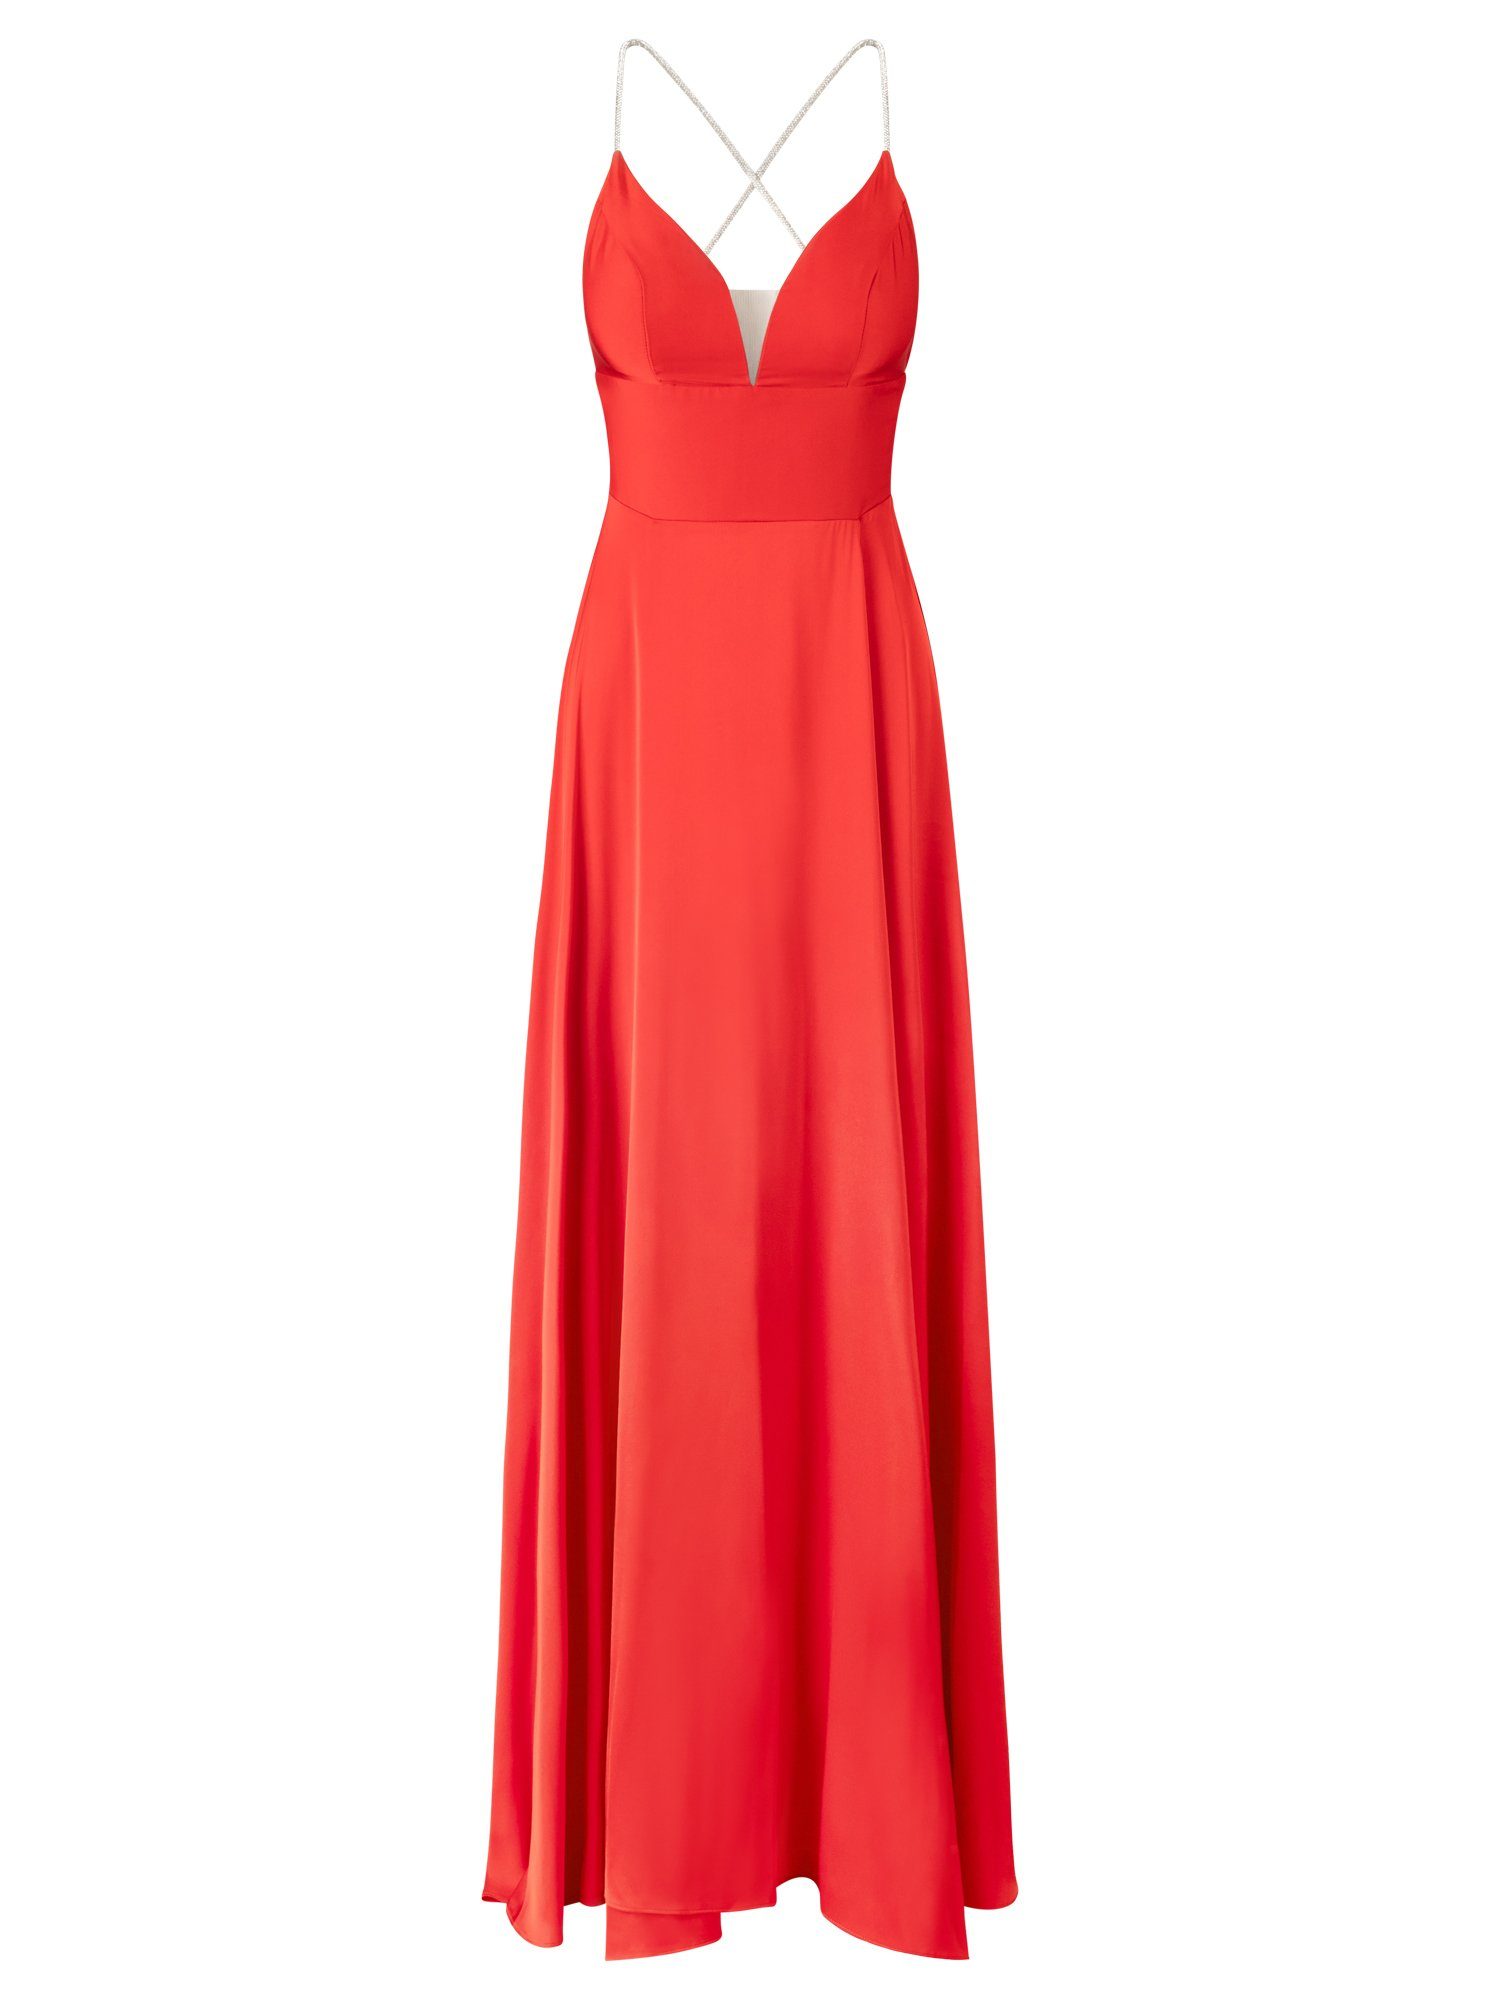 Apart Abendkleid Stil rot mit elegantem